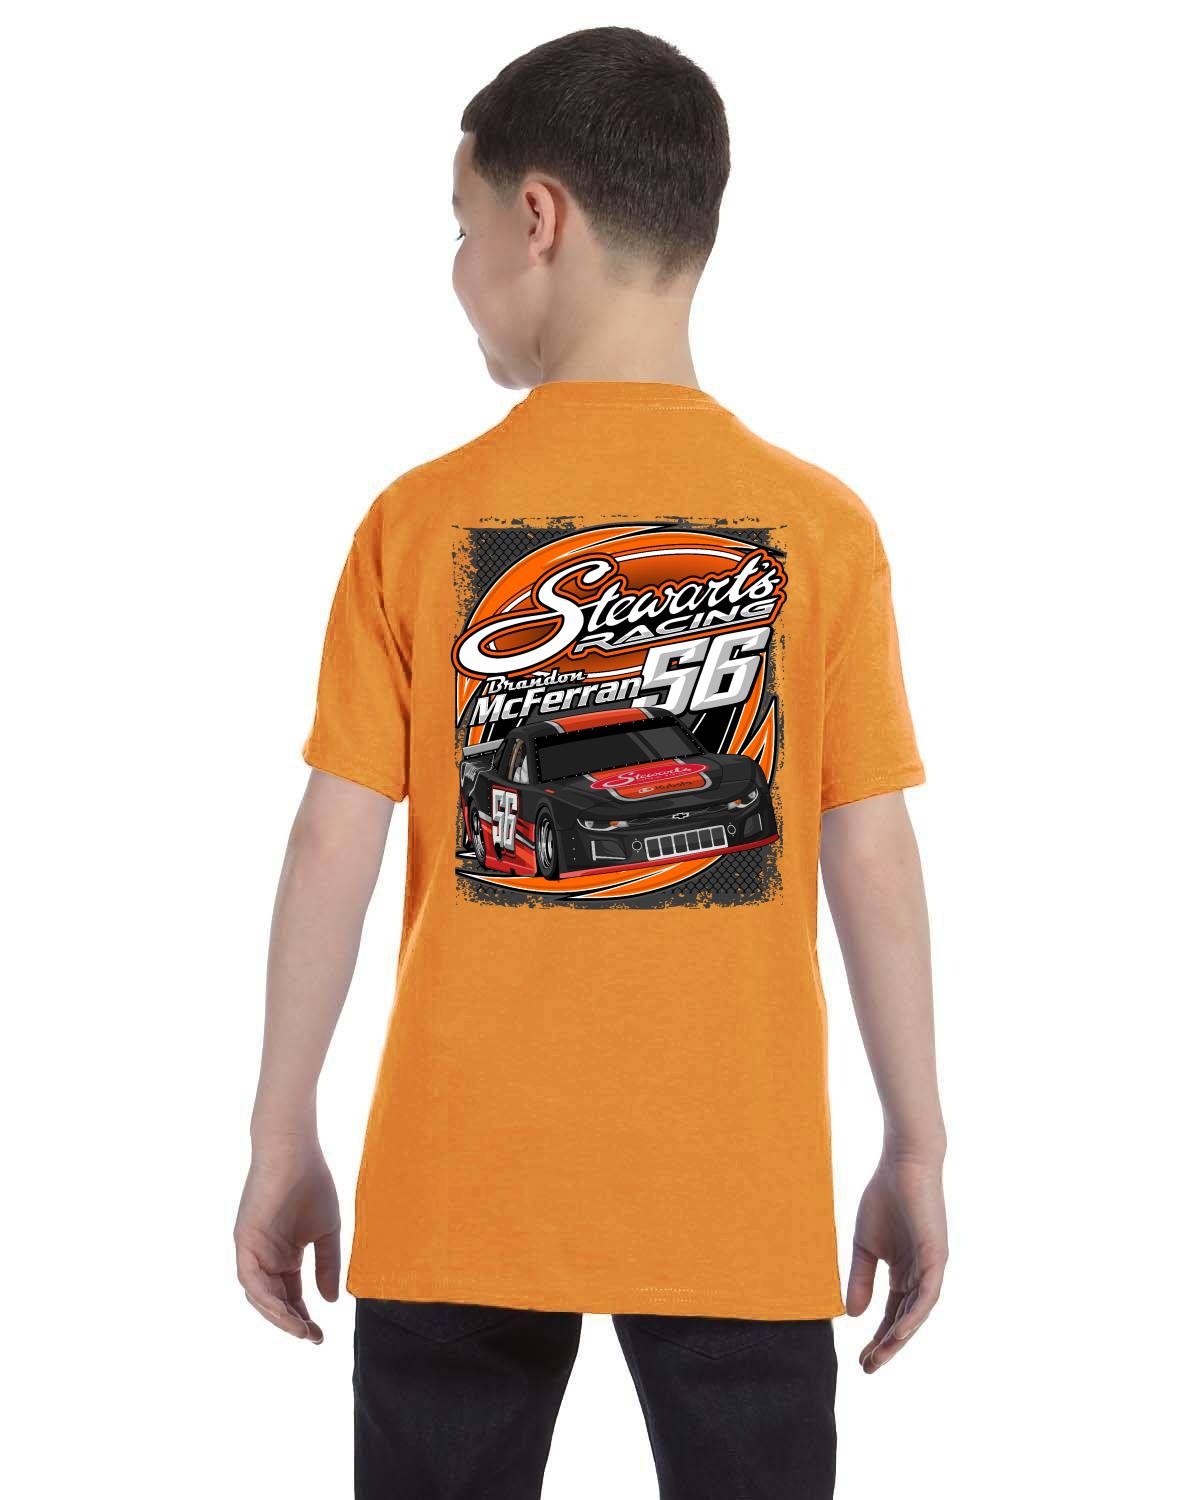 Stewart's Racing Brandon McFerran 56 Youth tshirt